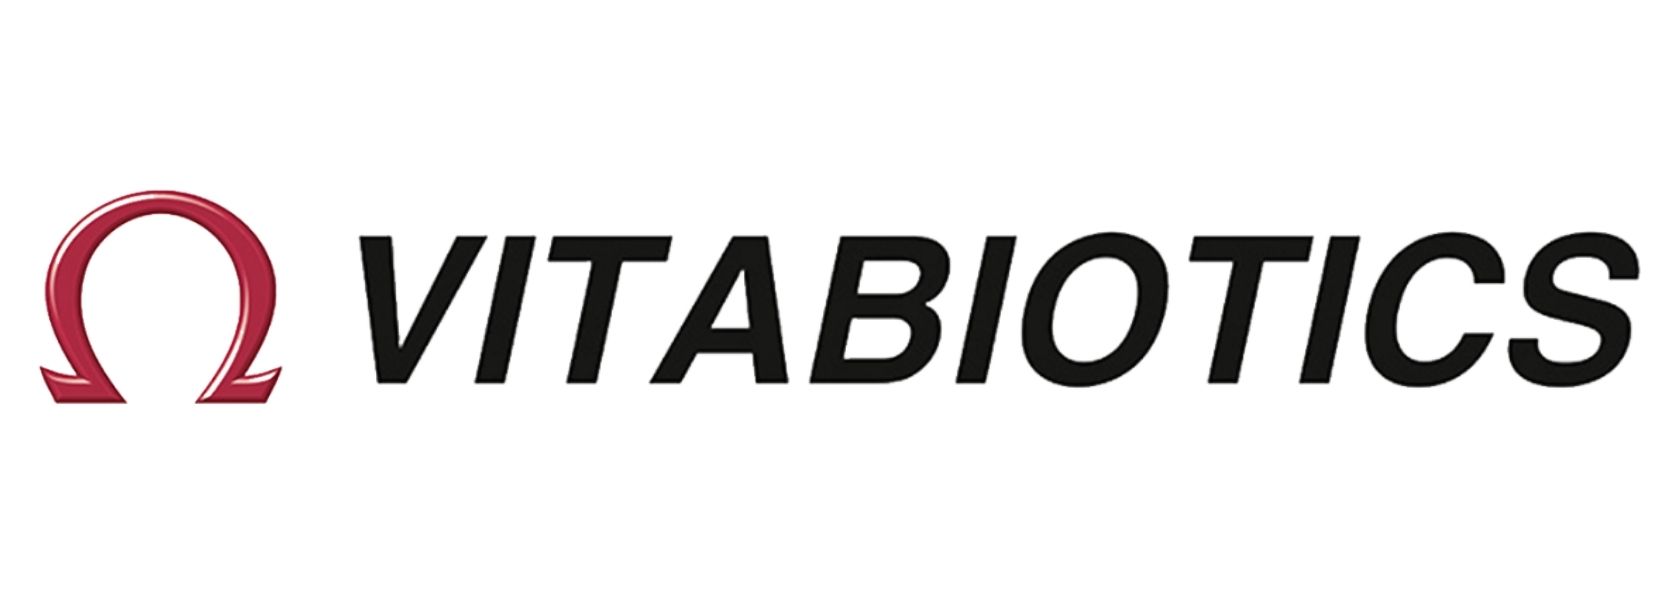 Logo de vitabiotics maroc en para en ligne